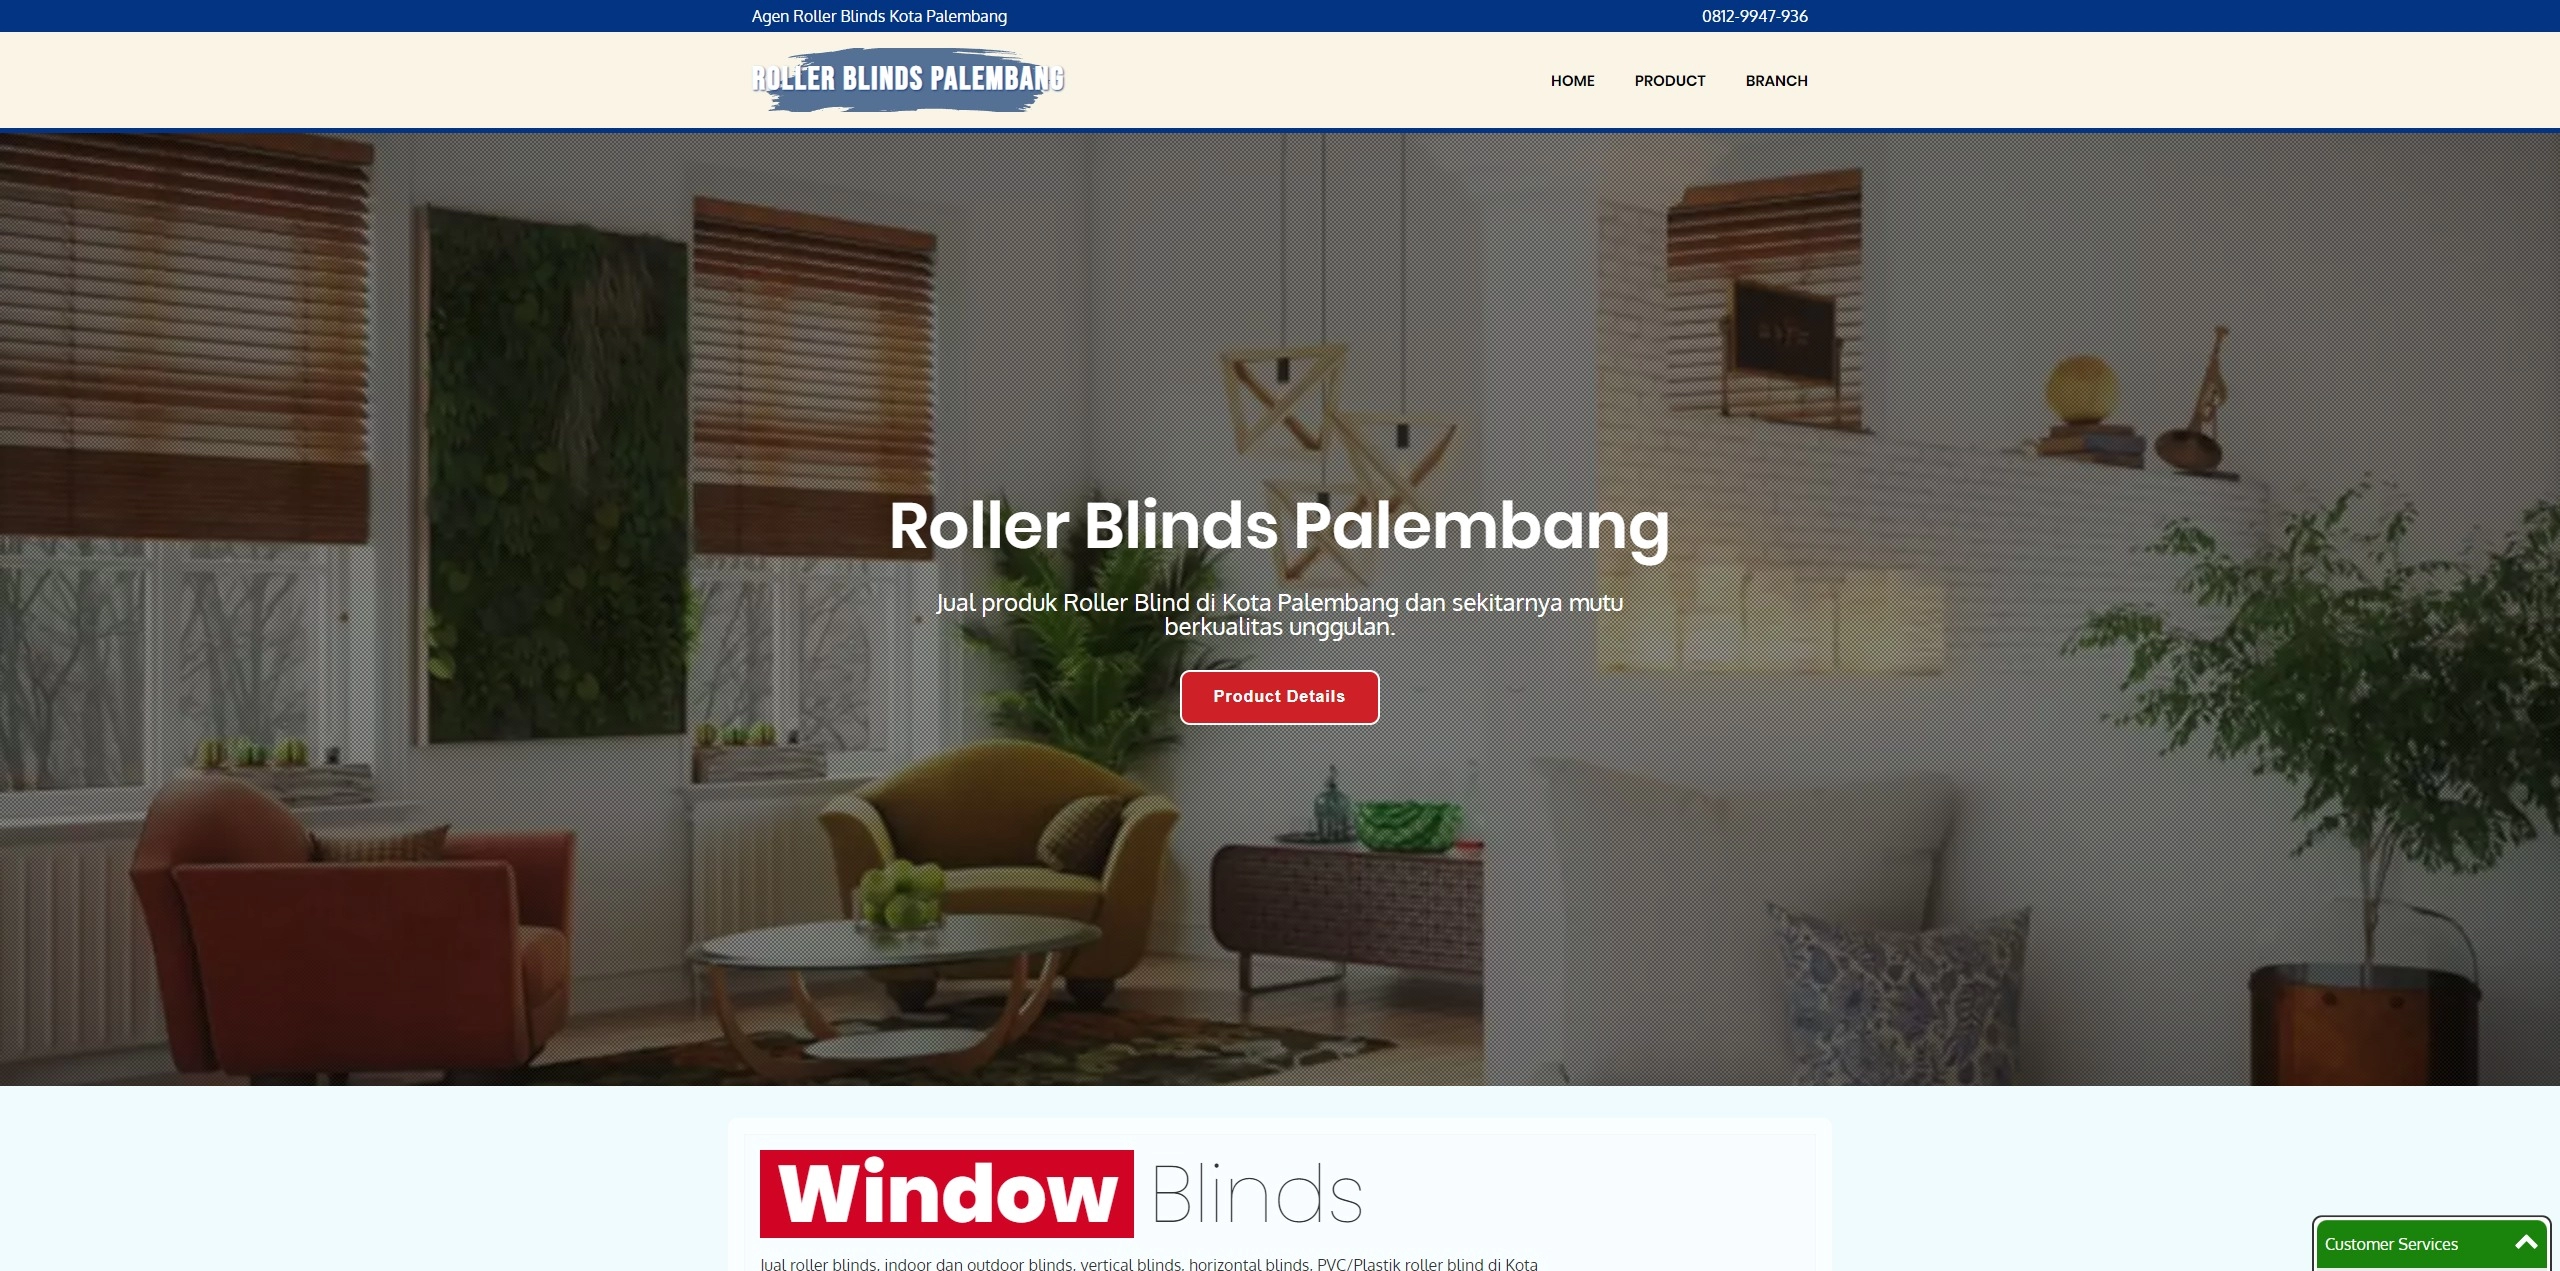 Roller Blinds Palembang